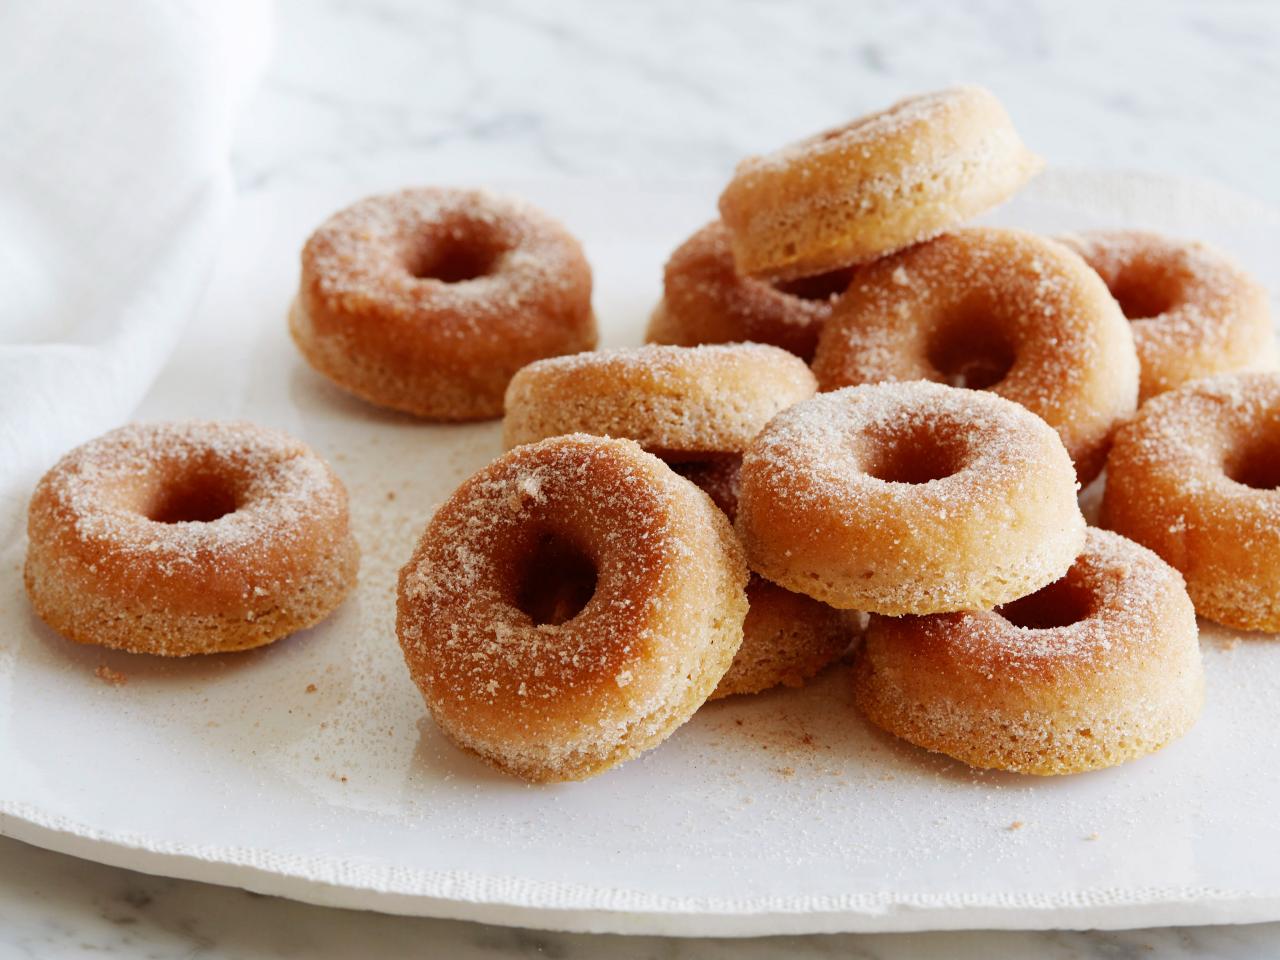 https://food.fnr.sndimg.com/content/dam/images/food/fullset/2013/7/29/0/BX0903H_cinnamon-baked-doughnuts-recipe_s4x3.jpg.rend.hgtvcom.1280.960.suffix/1449692373072.jpeg